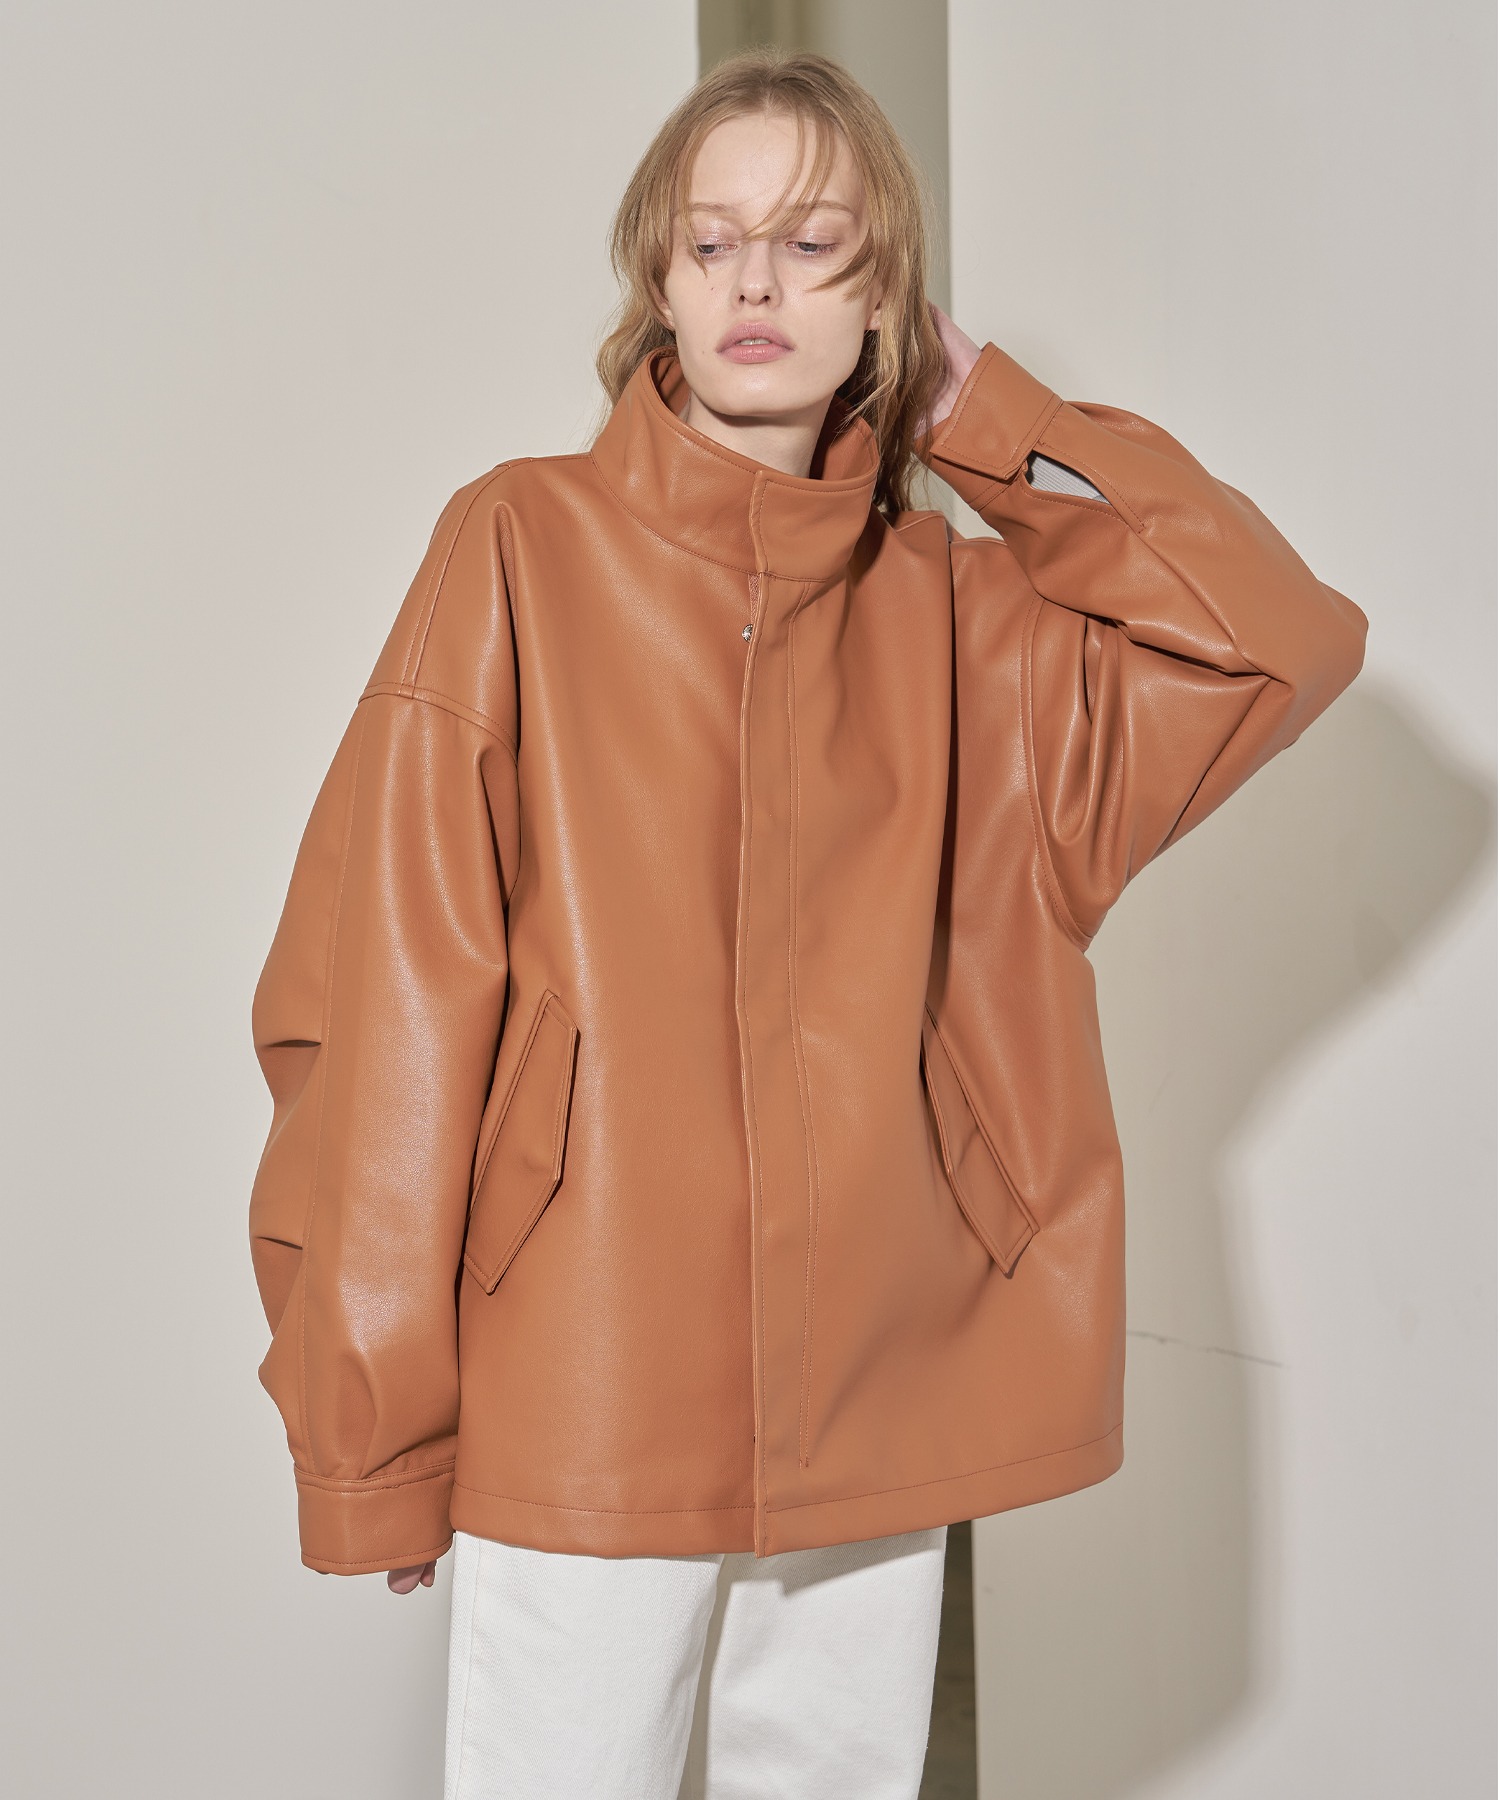 Urban Leather Jacket (Peach Caramel)